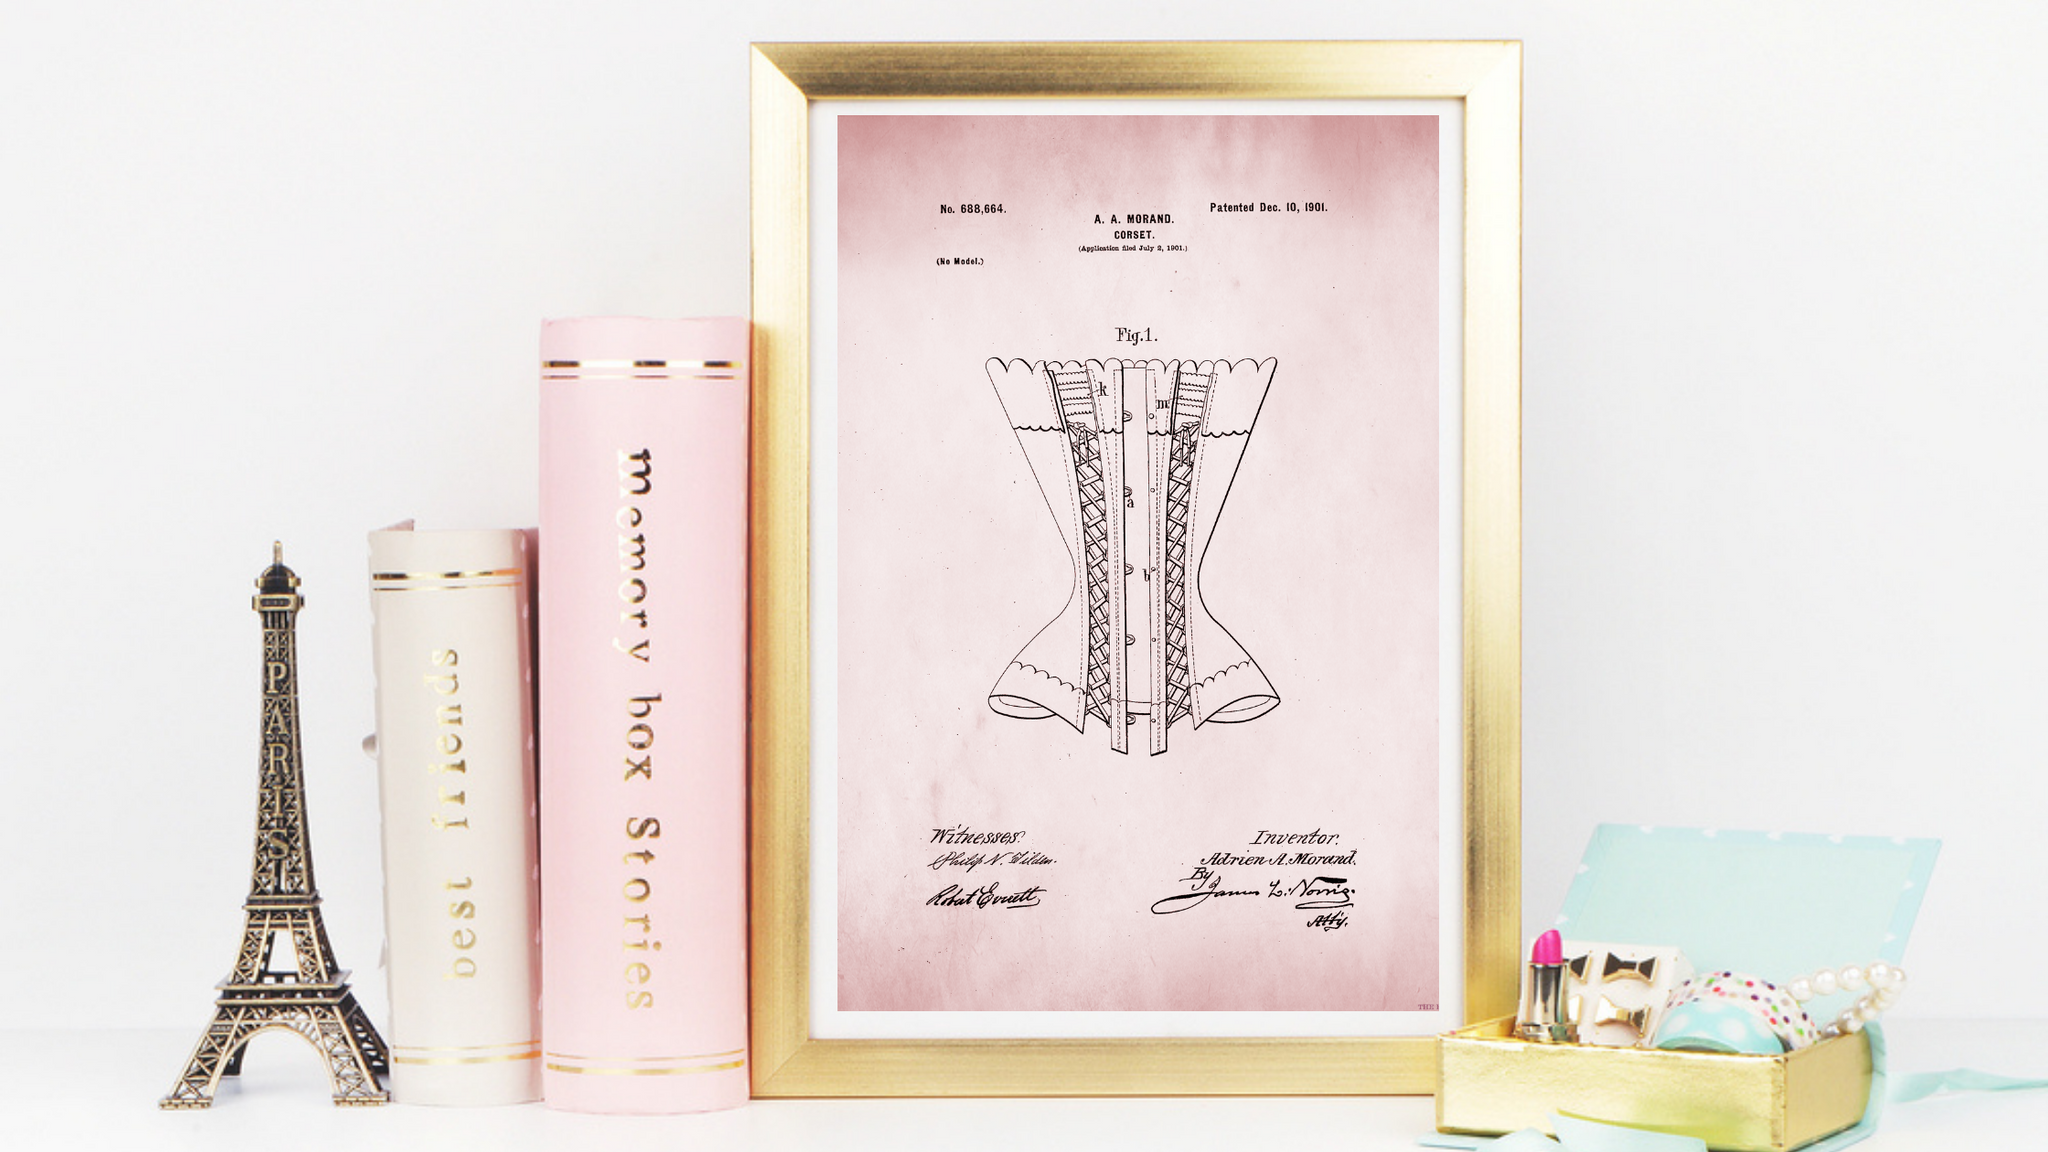 1901 Corset Patent Drawing